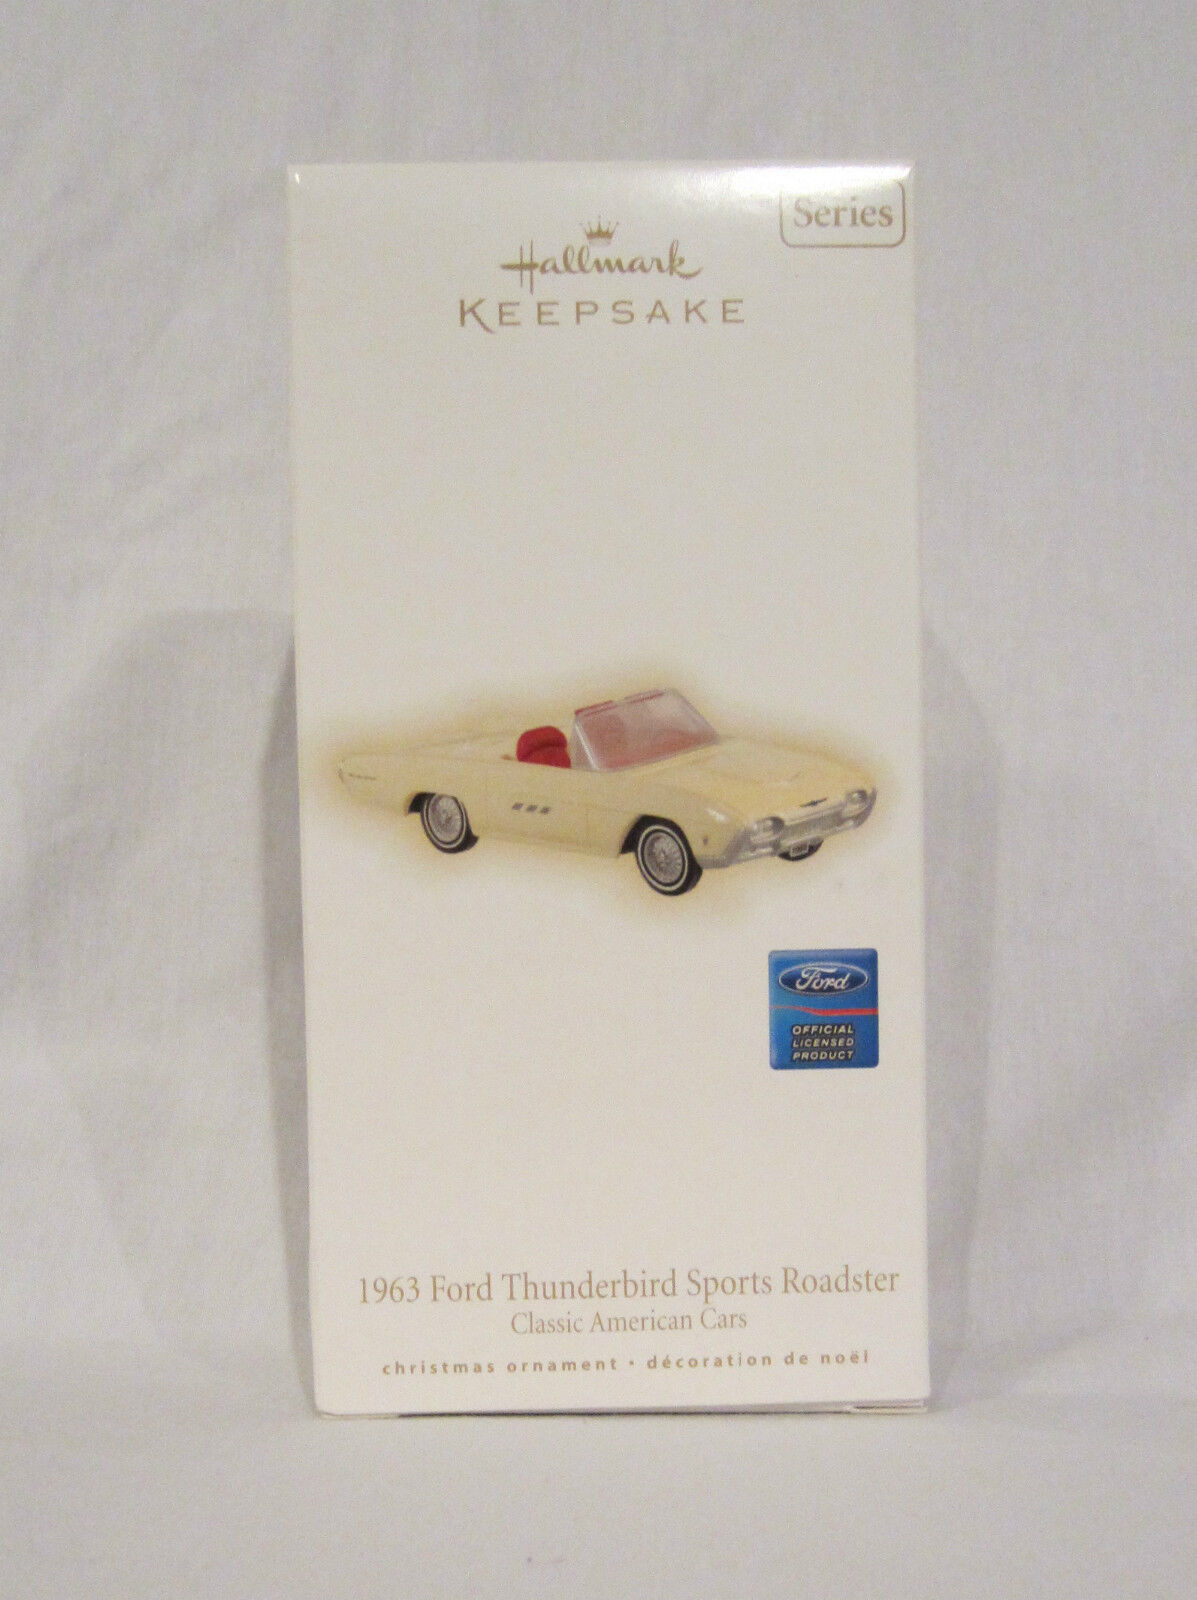 Hallmark Keepsake Ornament 1963 Ford Thunderbird Sports Roadster